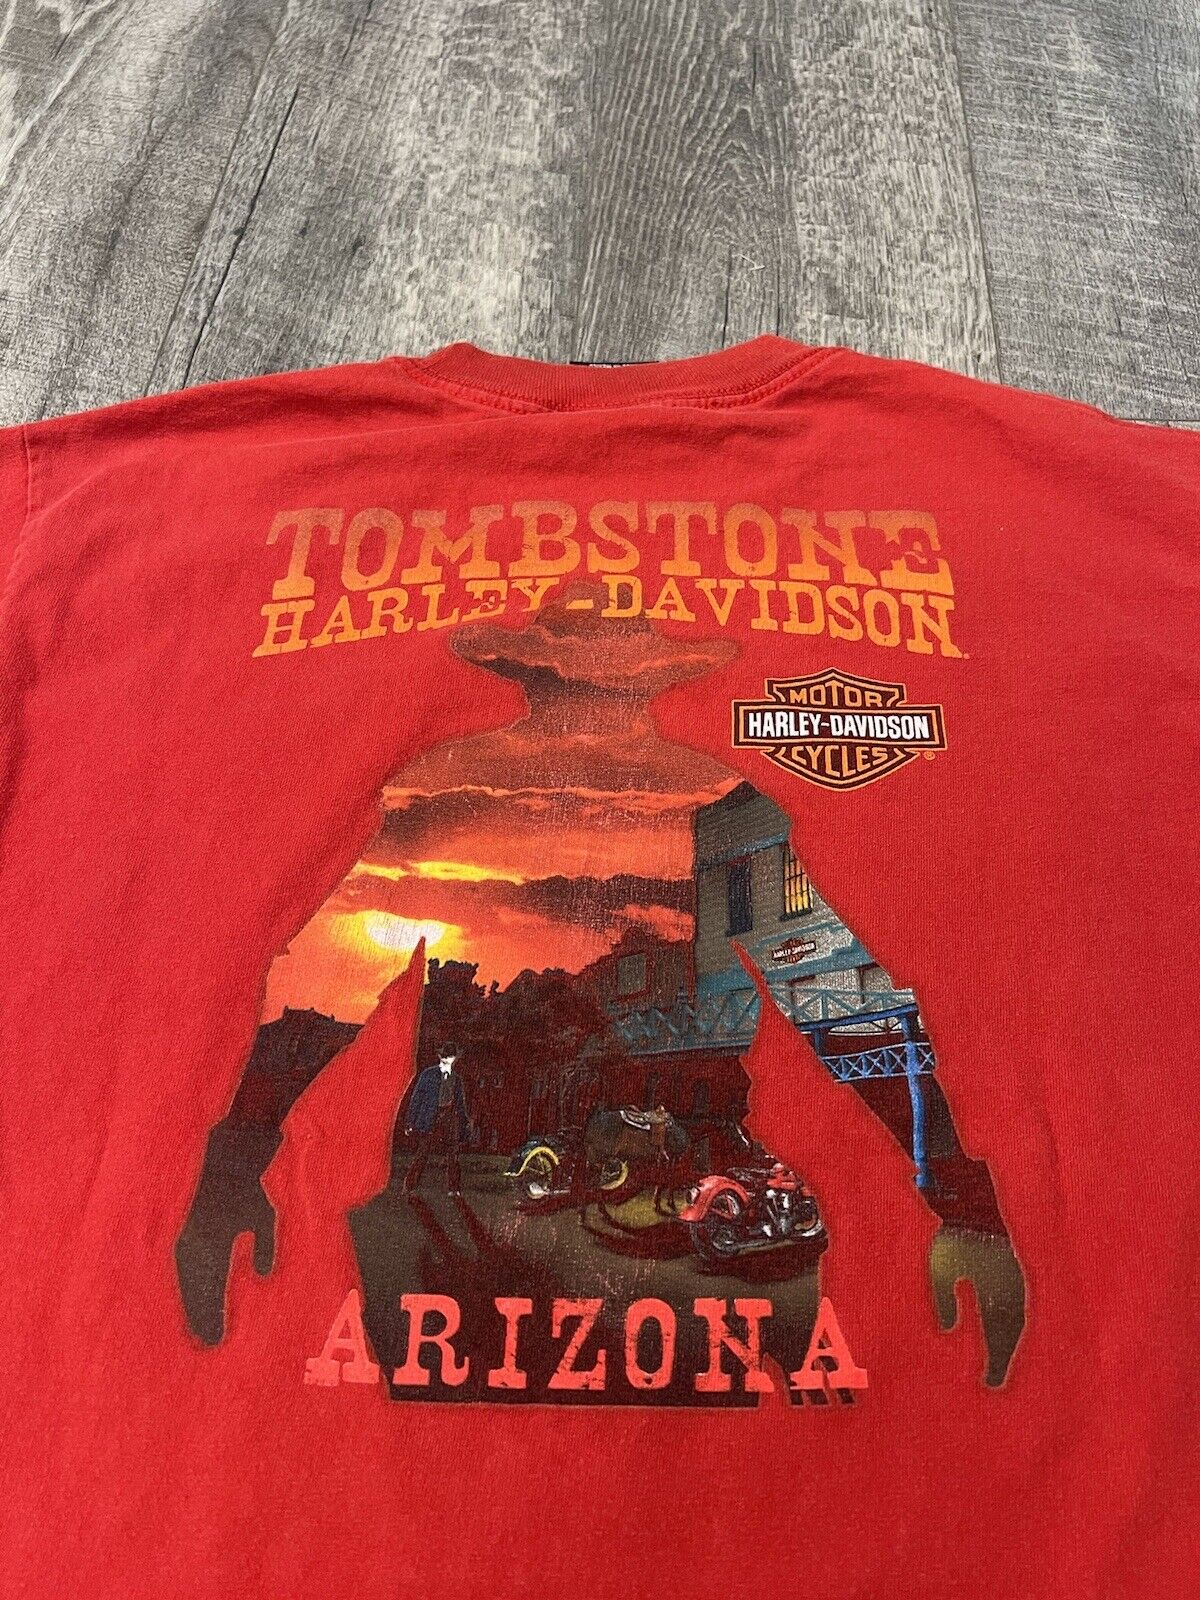 Harley Davidson Shirt Mens Medium Tombstone Arizona Cowboy Western Flame Fire